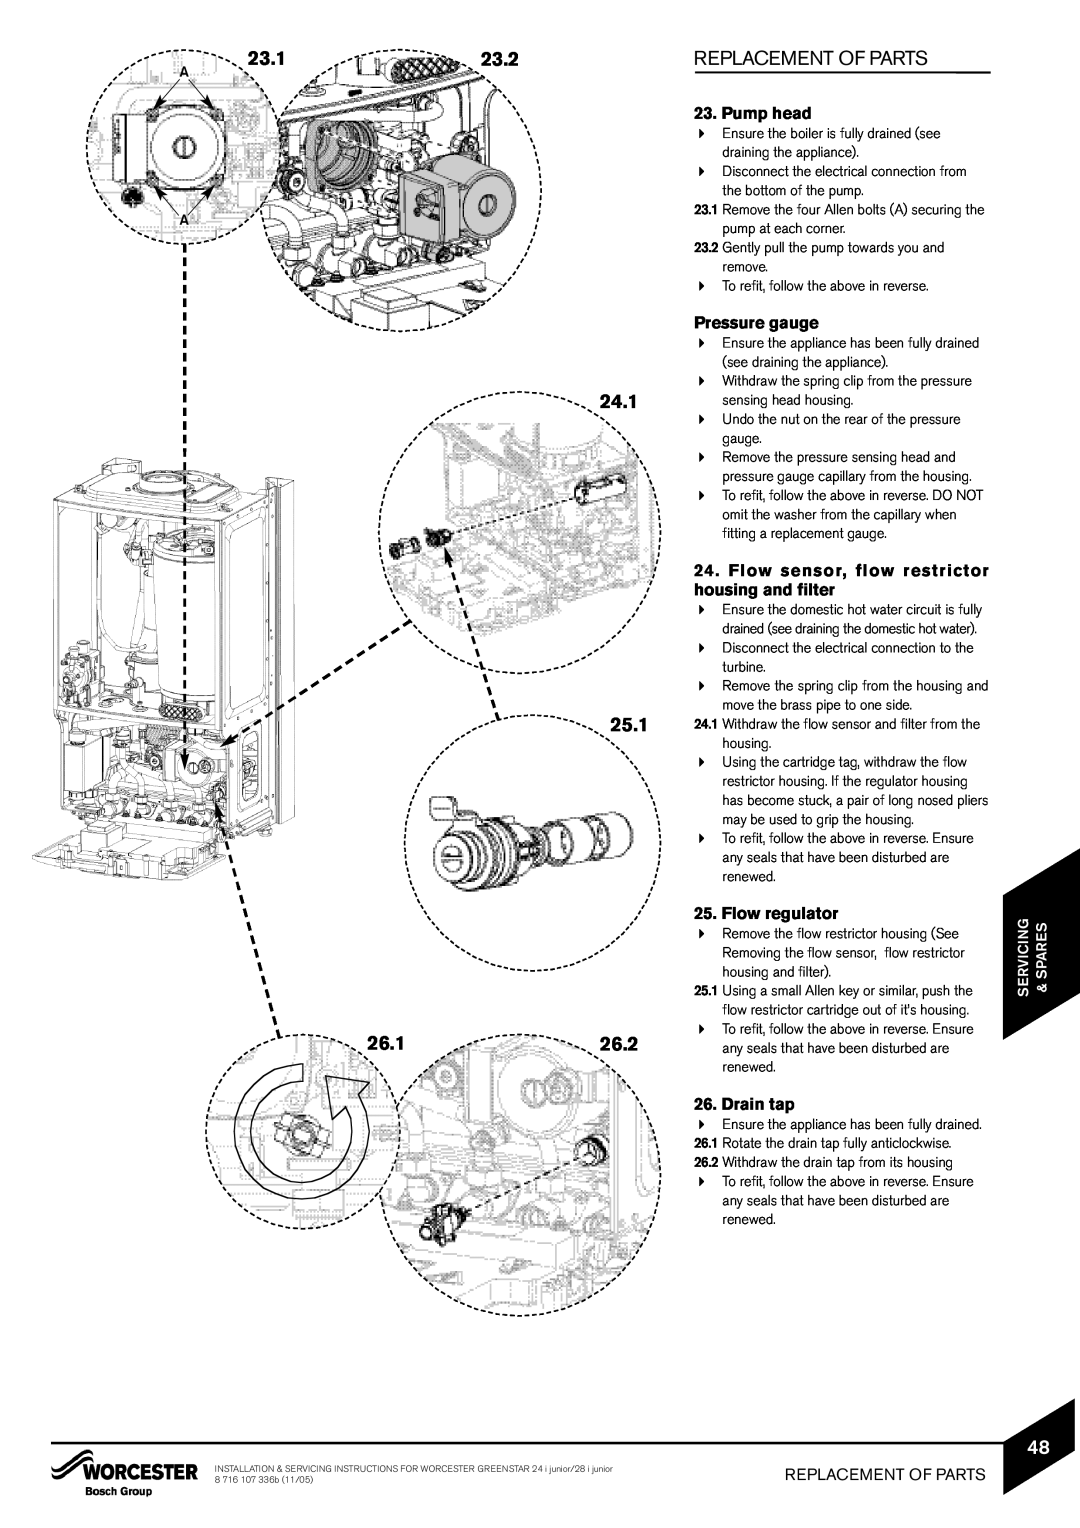 Bosch Appliances 24i junior 23.1, 23.2, Replacement Of Parts, 24.1, 25.1, 26.1, 26.2, Pump head, Pressure gauge, Drain tap 